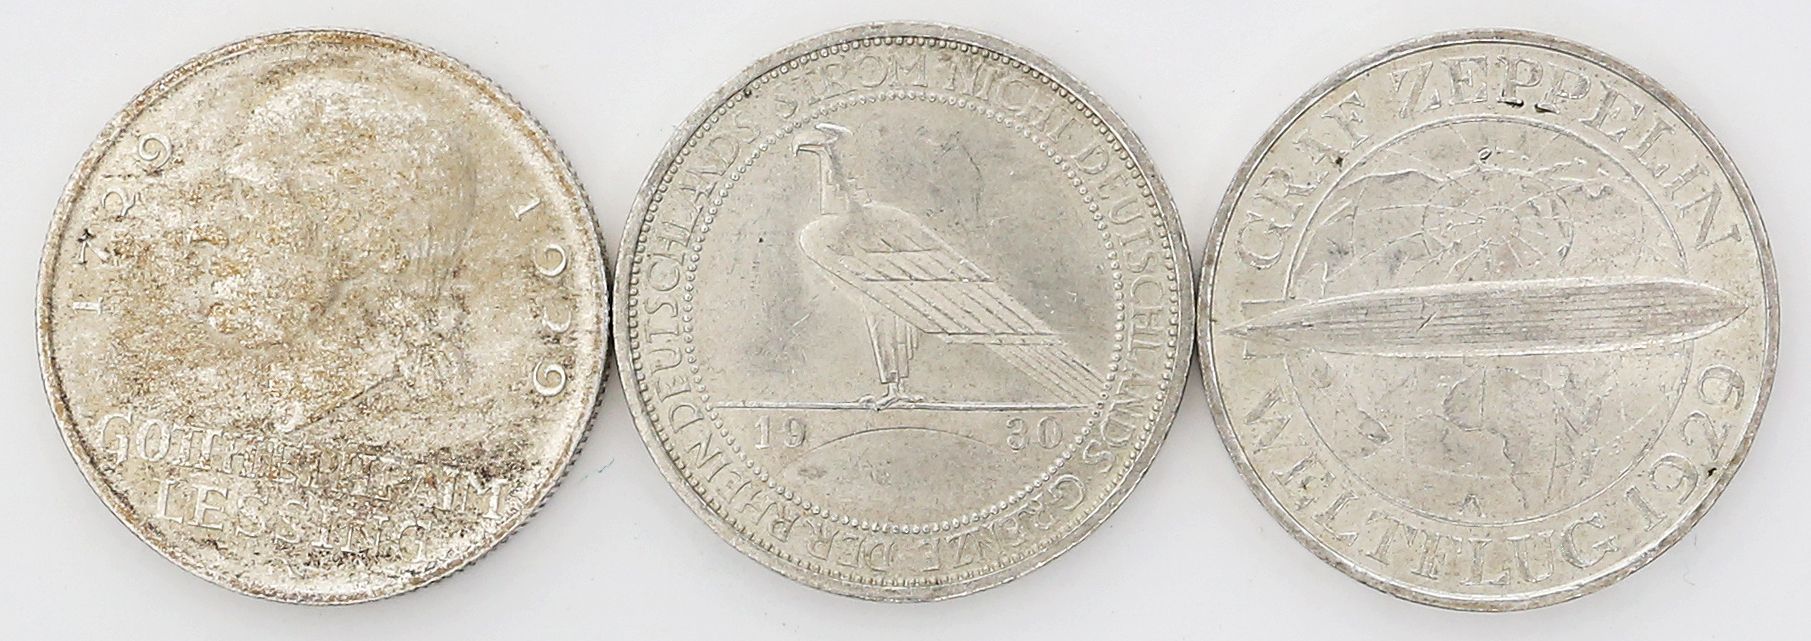 Weimarer Republik, drei 3-Mark-Gedenkmünzen: